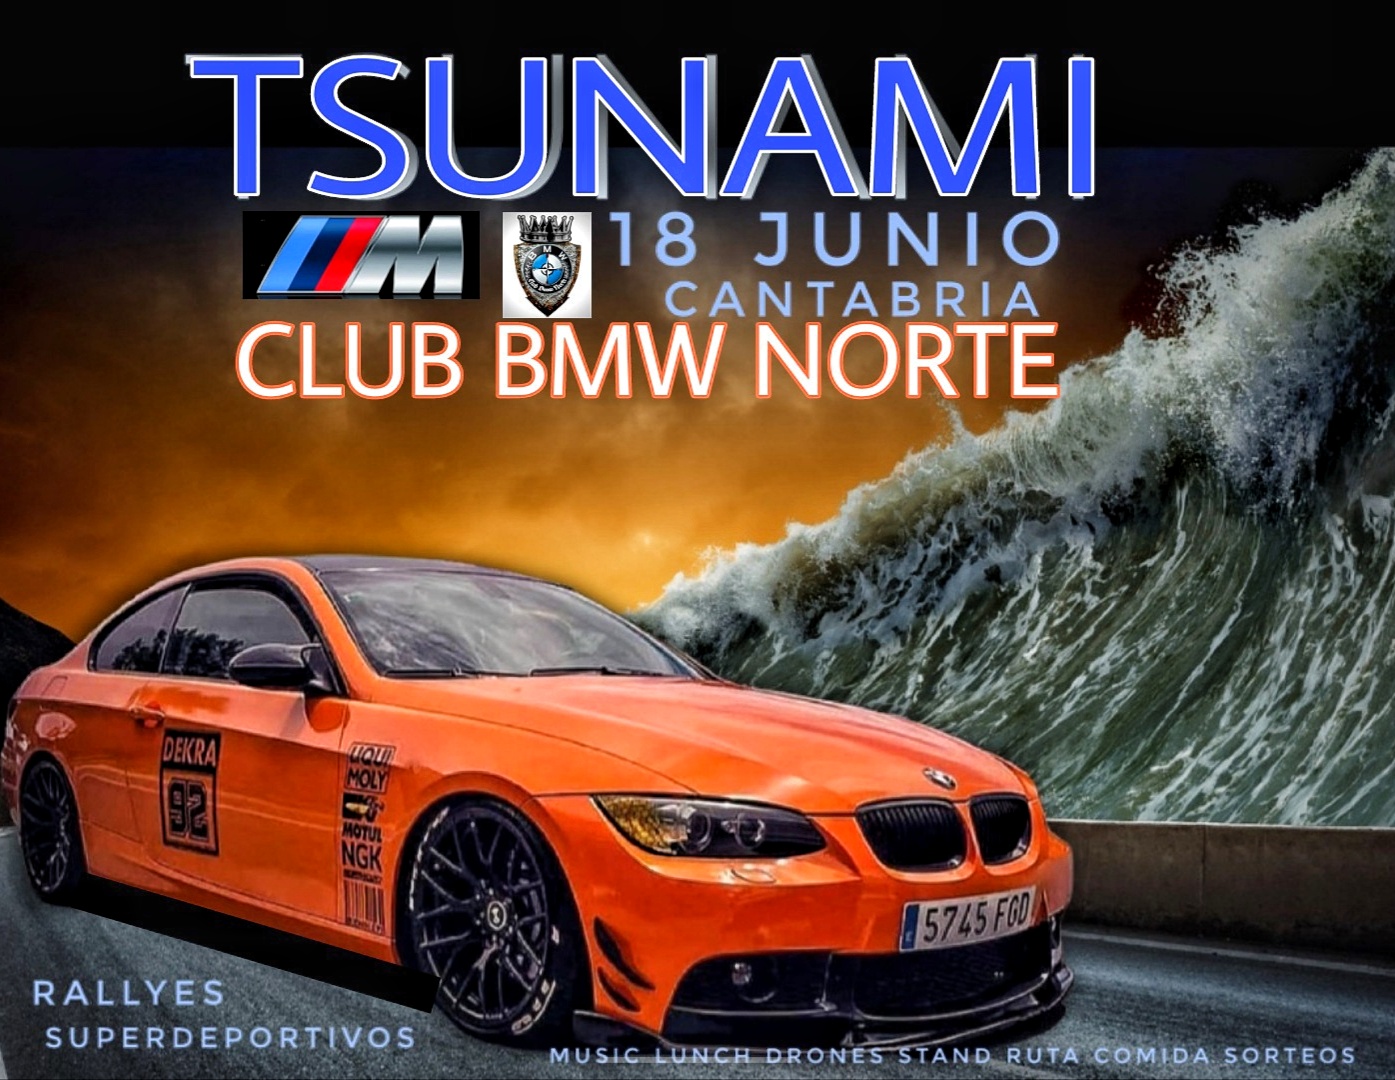 Tsunami CLUB BMW NORTE